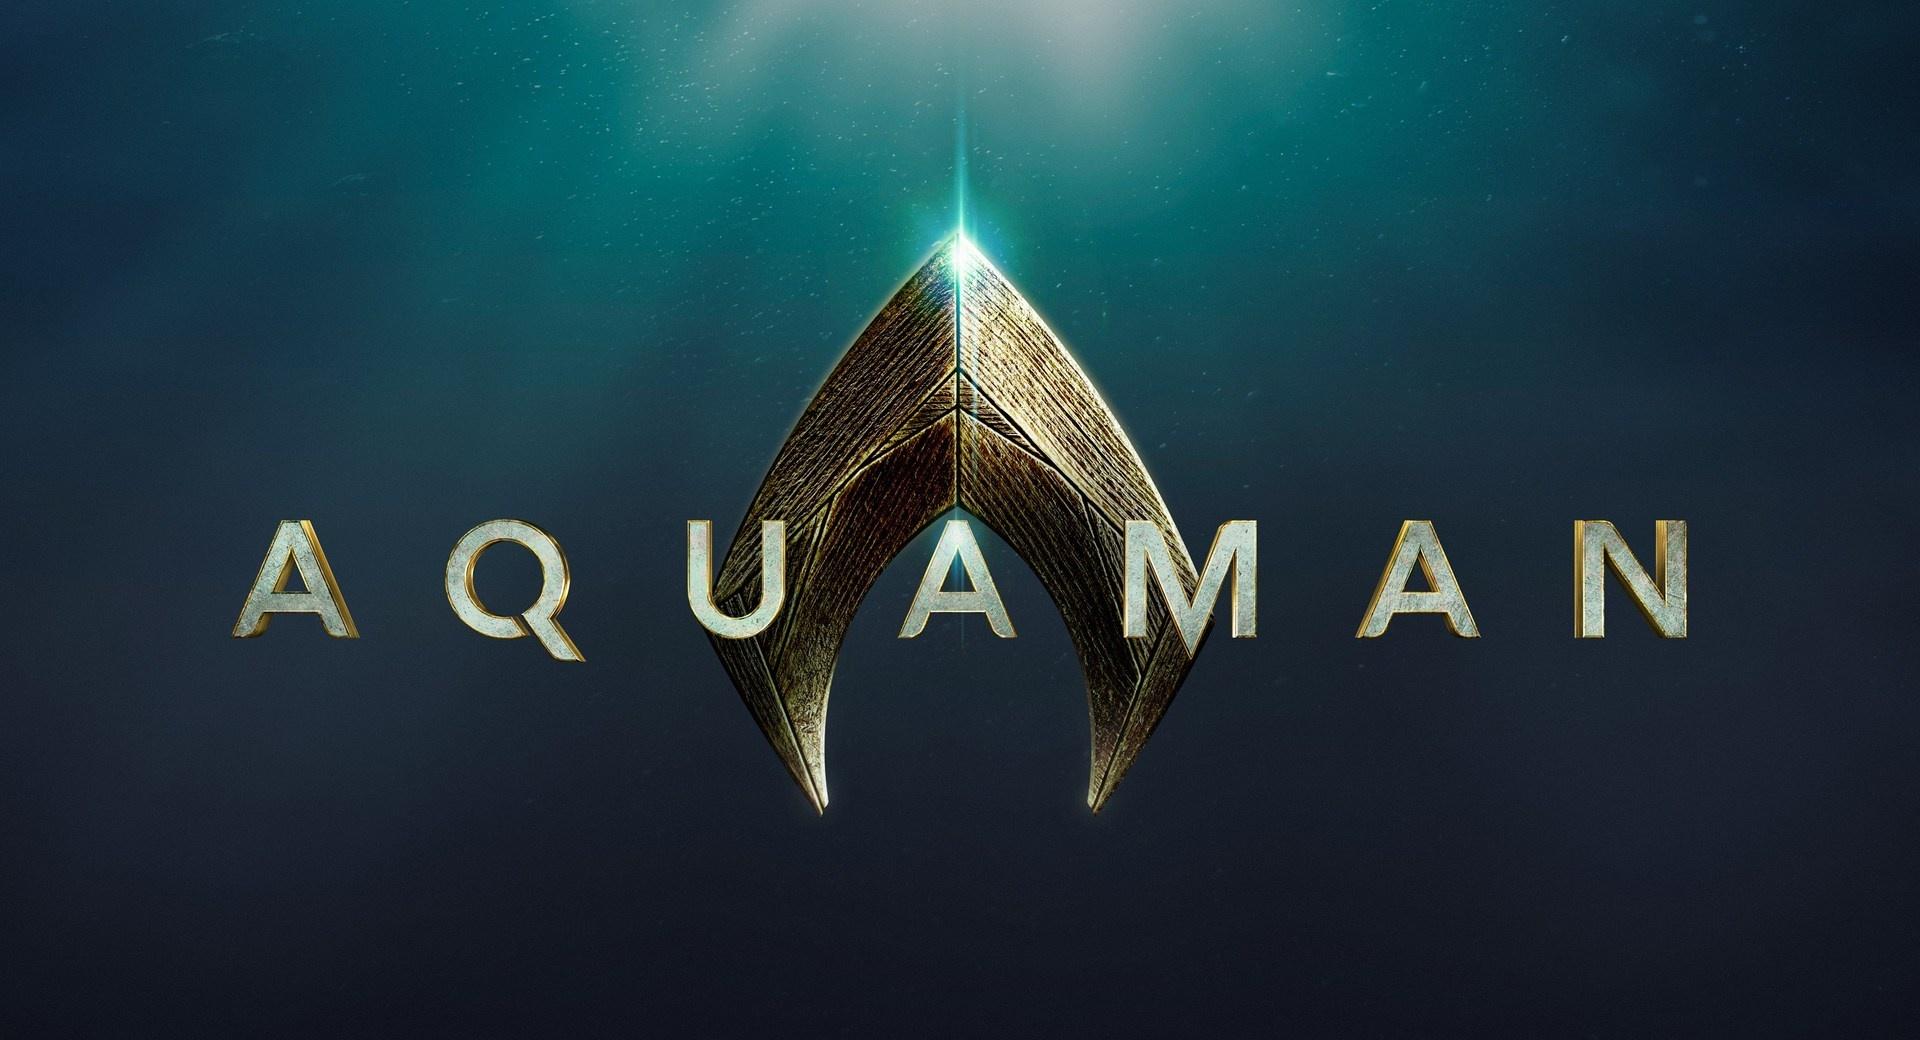 2018 Aquaman Movie Logo at 1024 x 1024 iPad size wallpapers HD quality